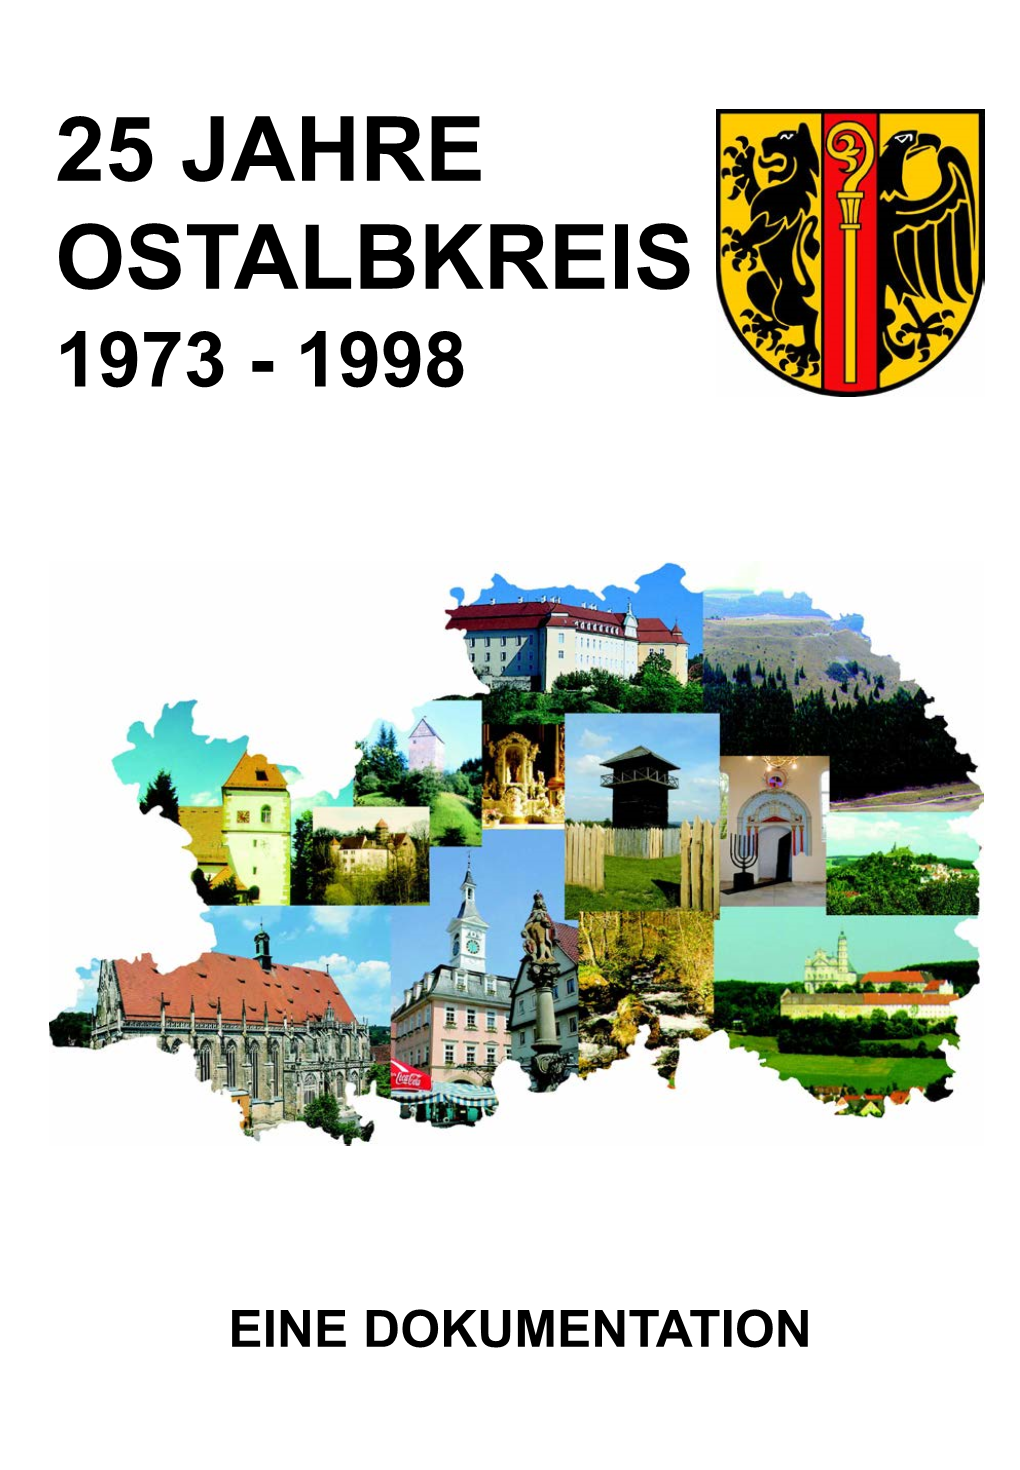 Festschrift "25 Jahre Ostalbkreis" (1998)